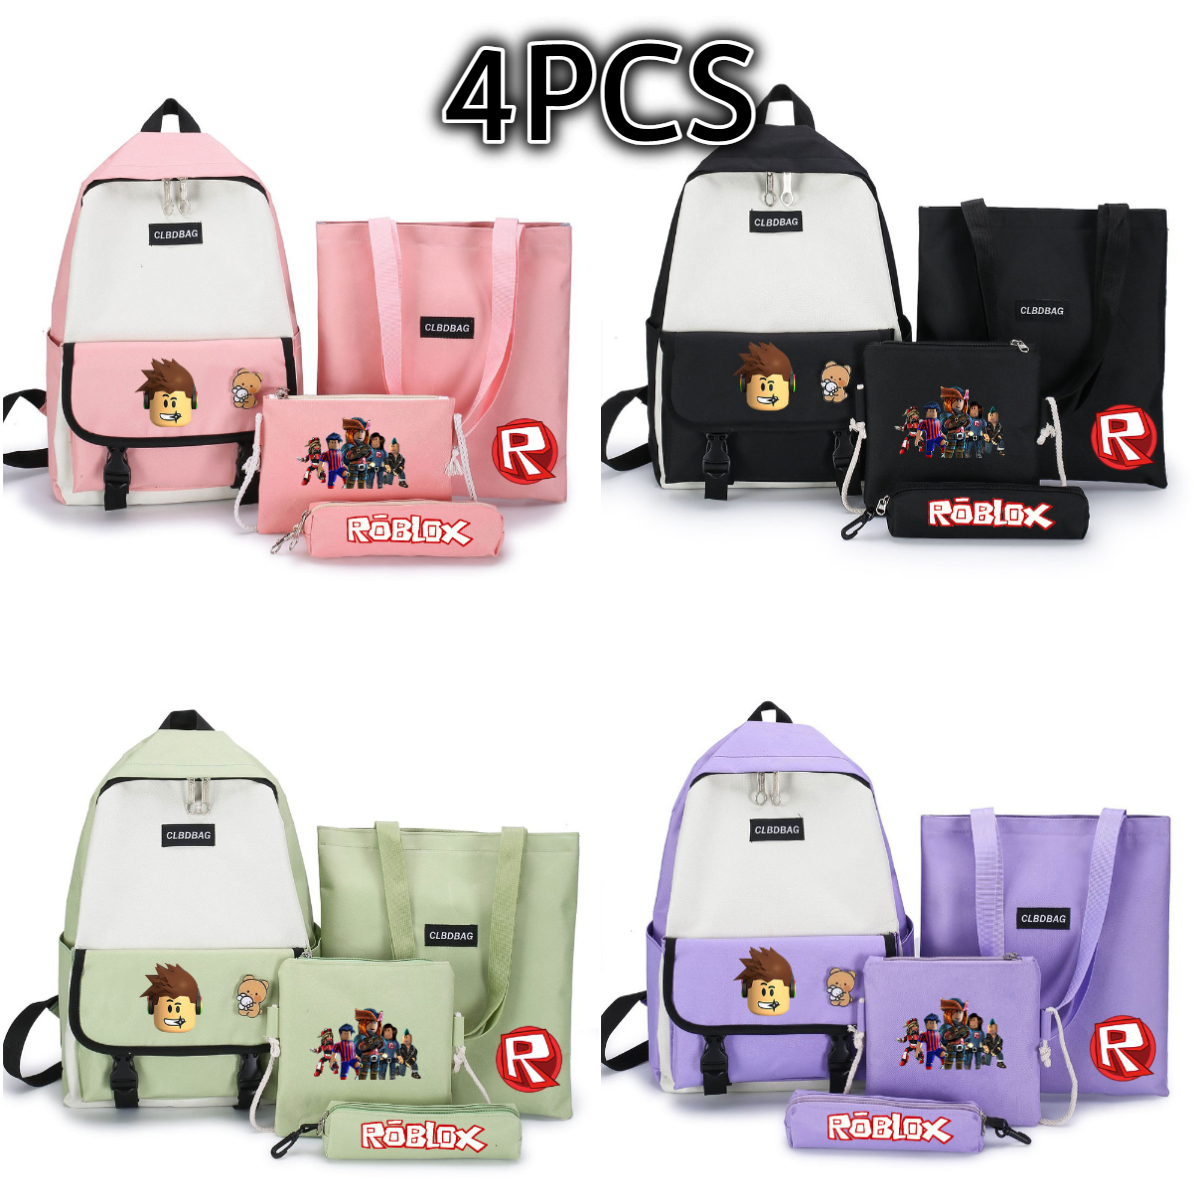 Buy 4pcs 4 In 1 Beg Sekolah Set Robux Roblox Roblox Bag Backpack Set Beg Sekolah Lelaki Roblox Game Backpack For School Kids Beg Set Sekolah Seetracker Malaysia - roblox robux backpack